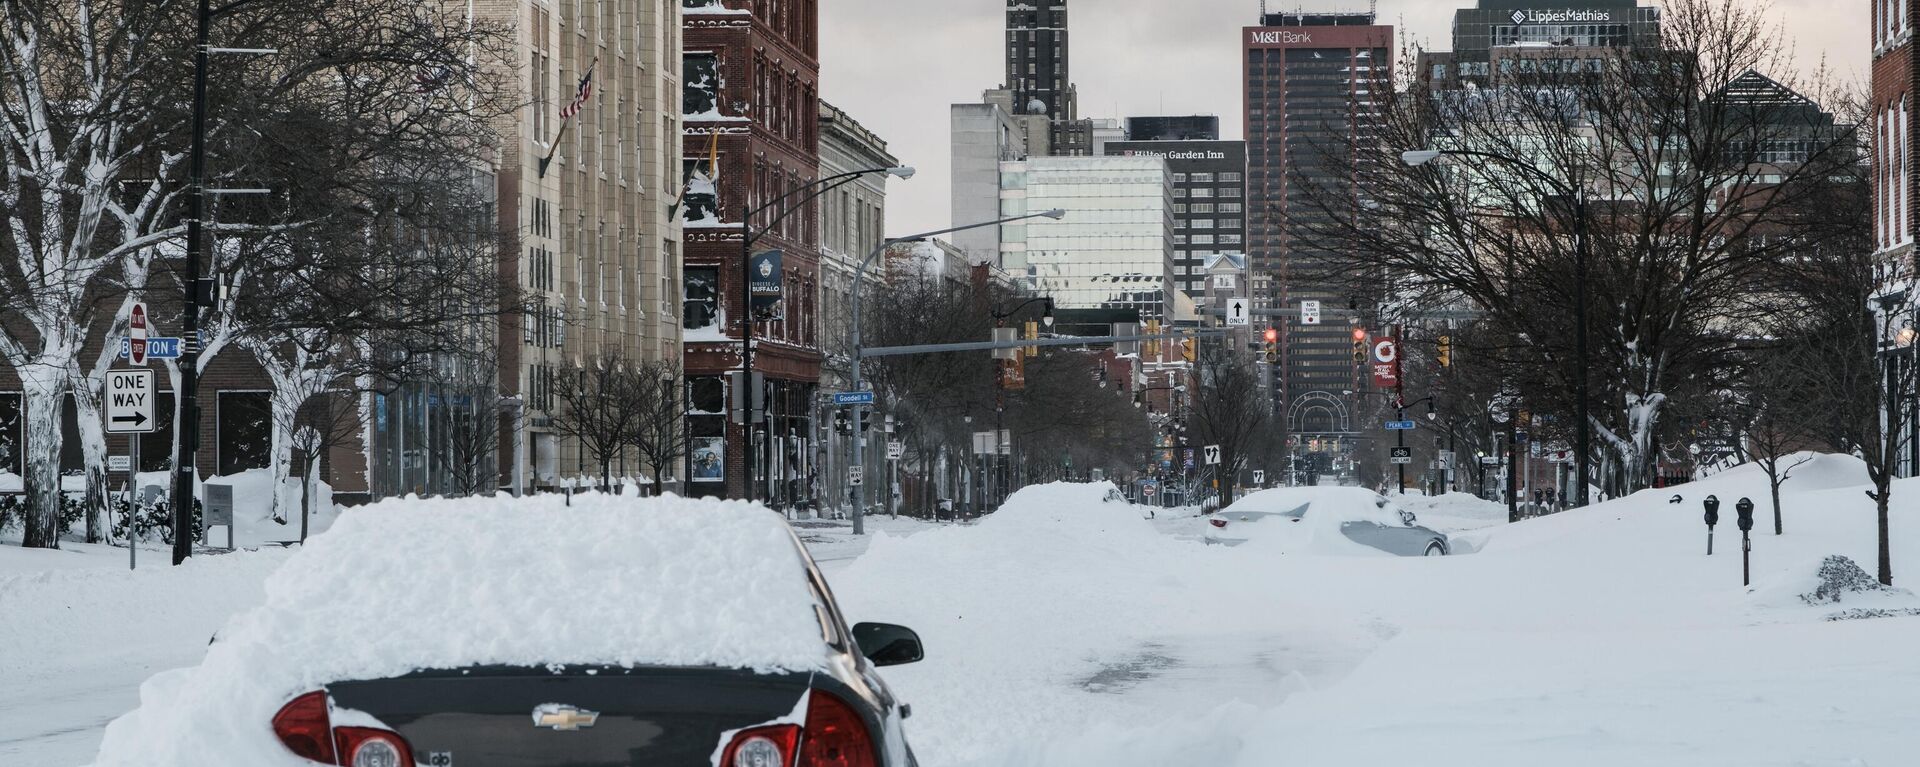 An abandoned vehicle is left under heavy snow along a street in Buffalo, New York, on December 25, 2022. - Sputnik International, 1920, 27.12.2022